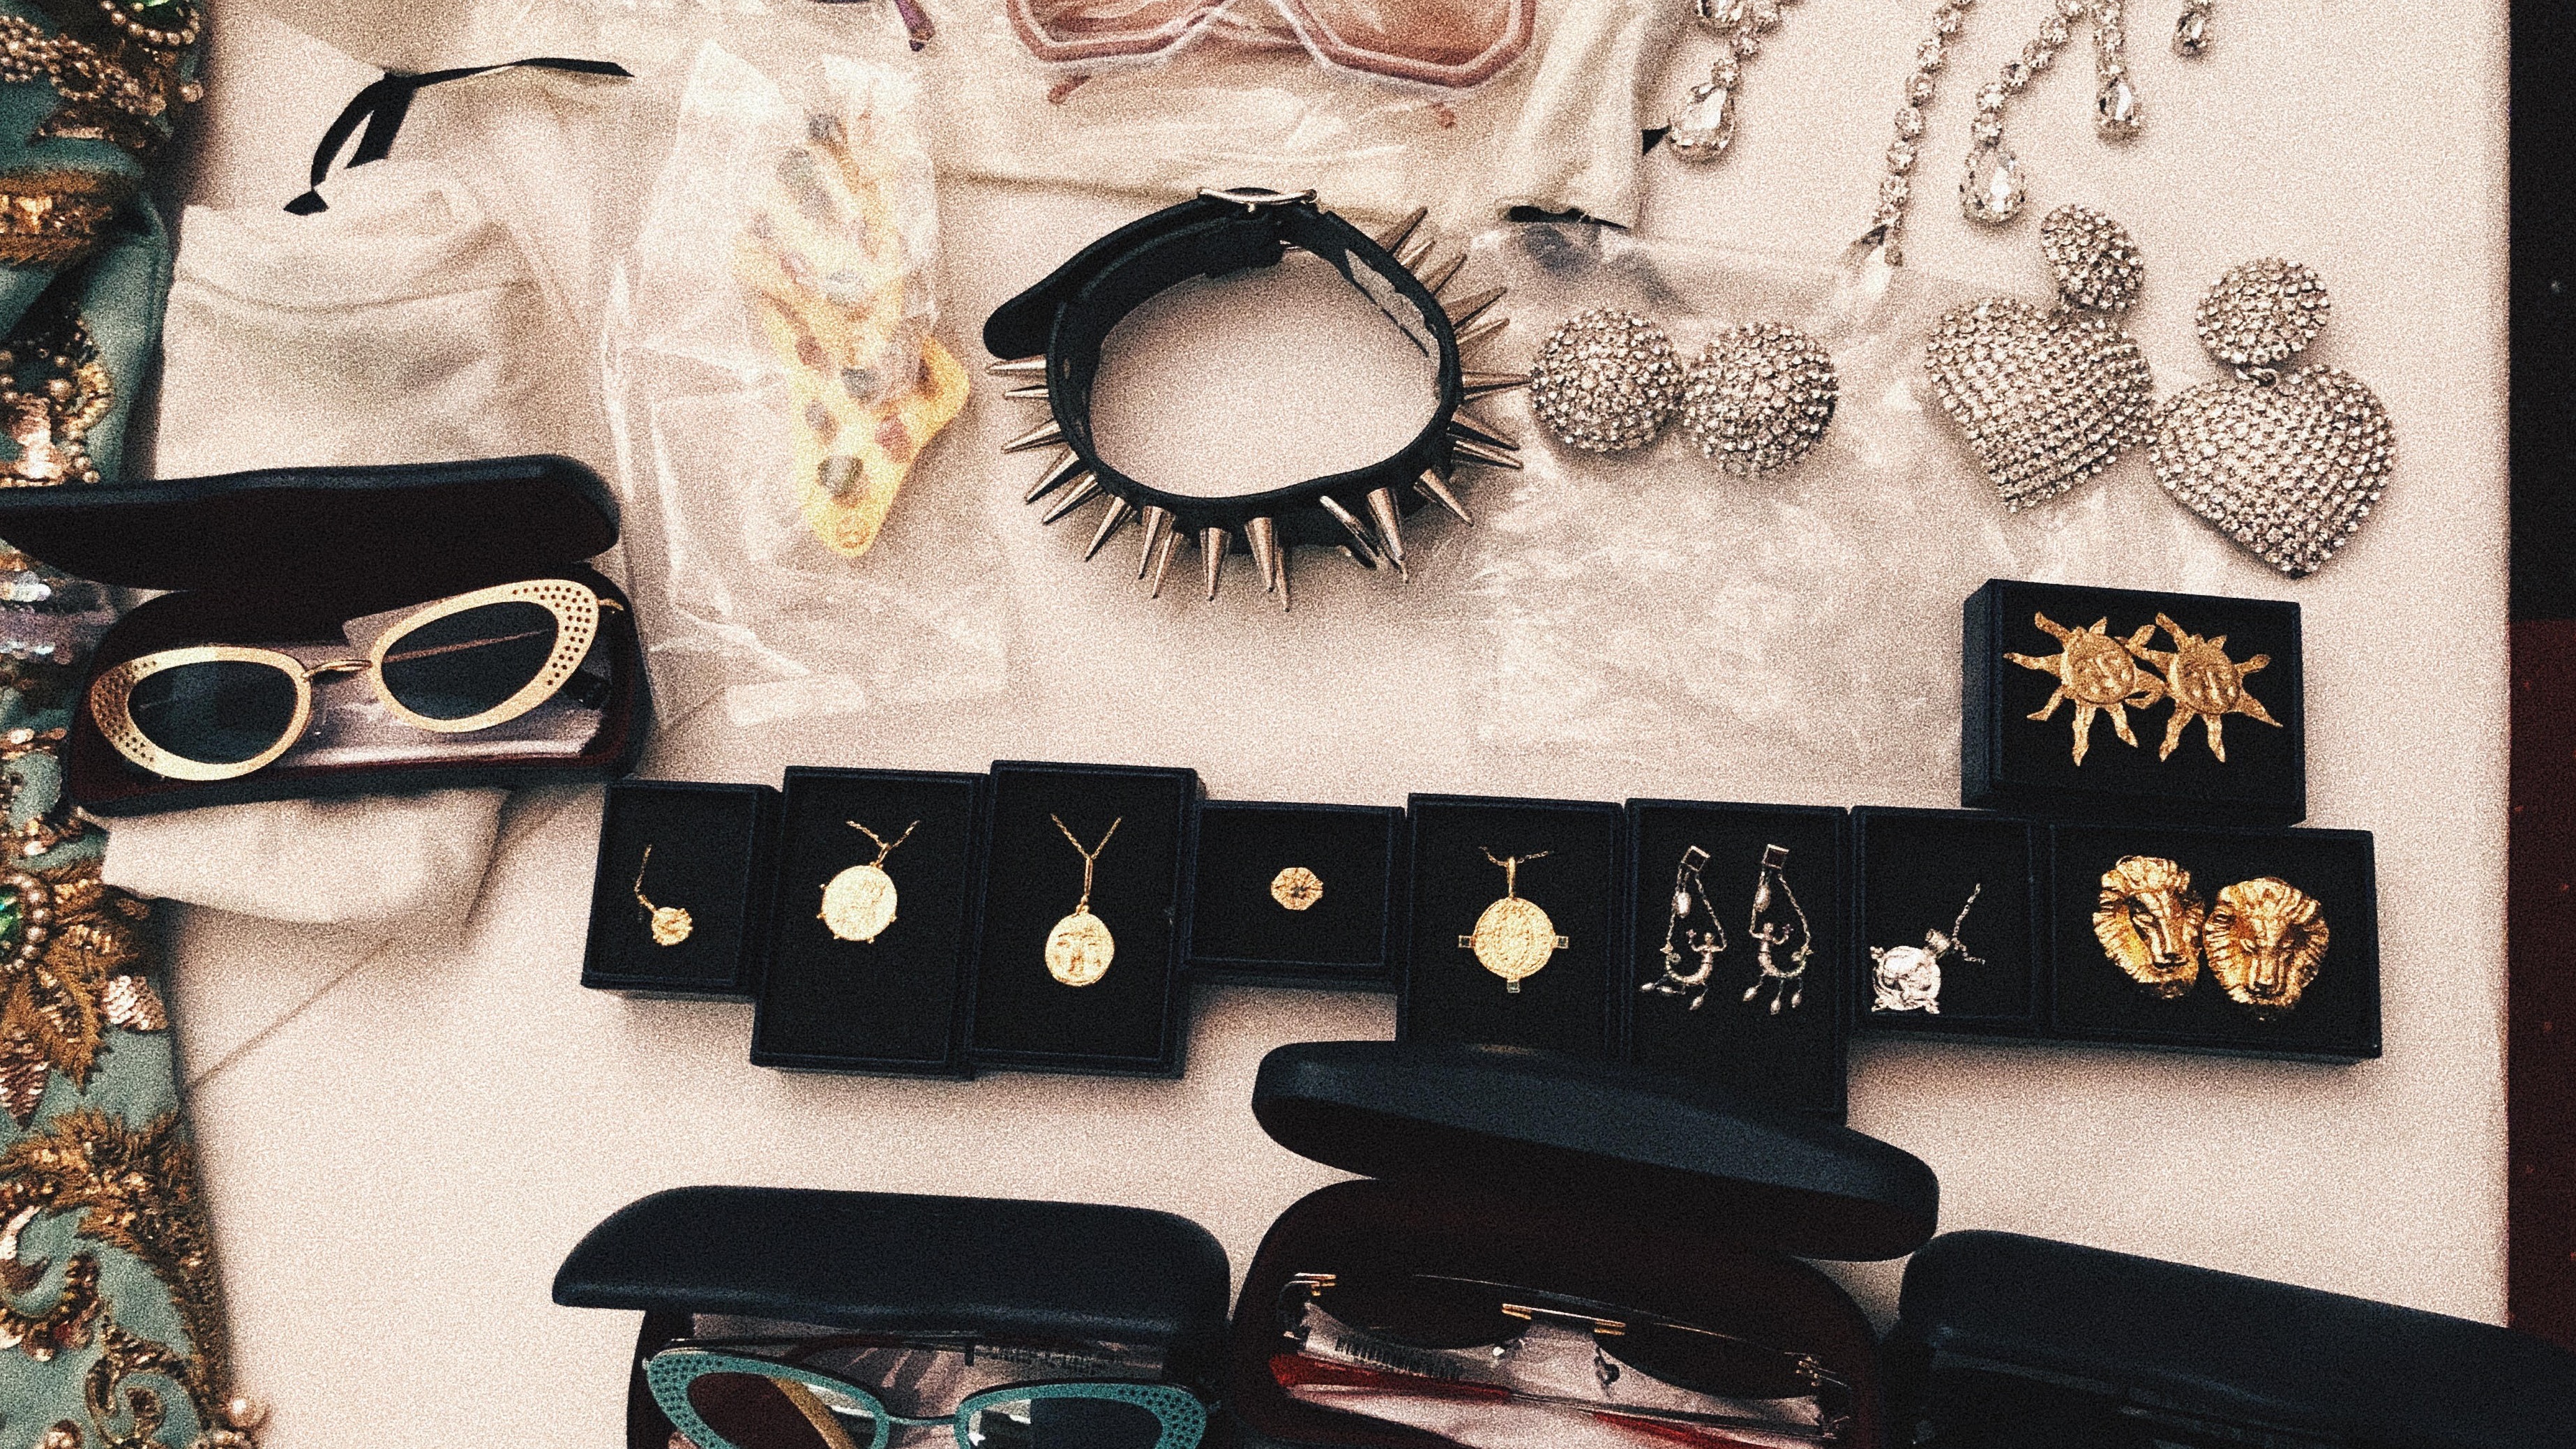 Selection of fashion memorabilia including sunglasses and chokers.